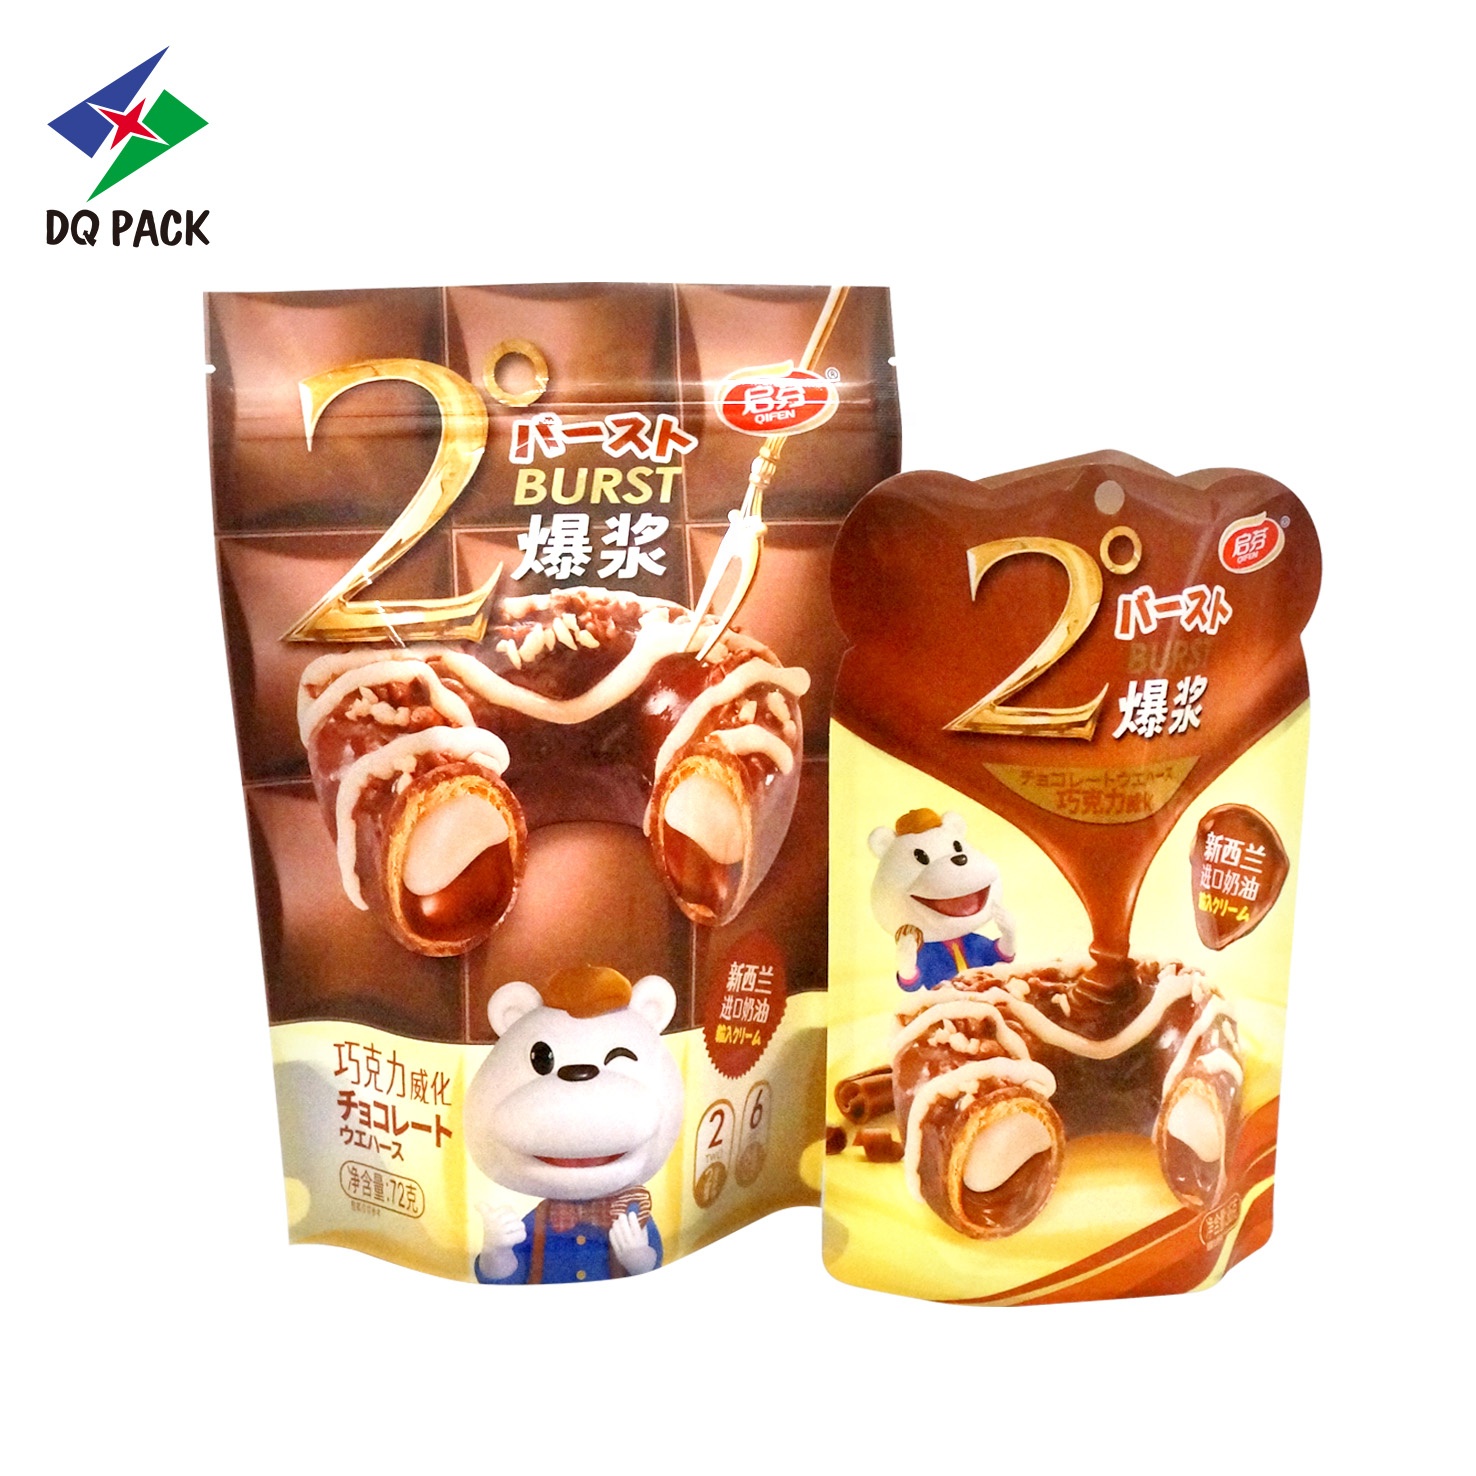 DQ PACK Resealable Chocolate Plastic Packaging Bag Easy Tear Food Packaging Bag